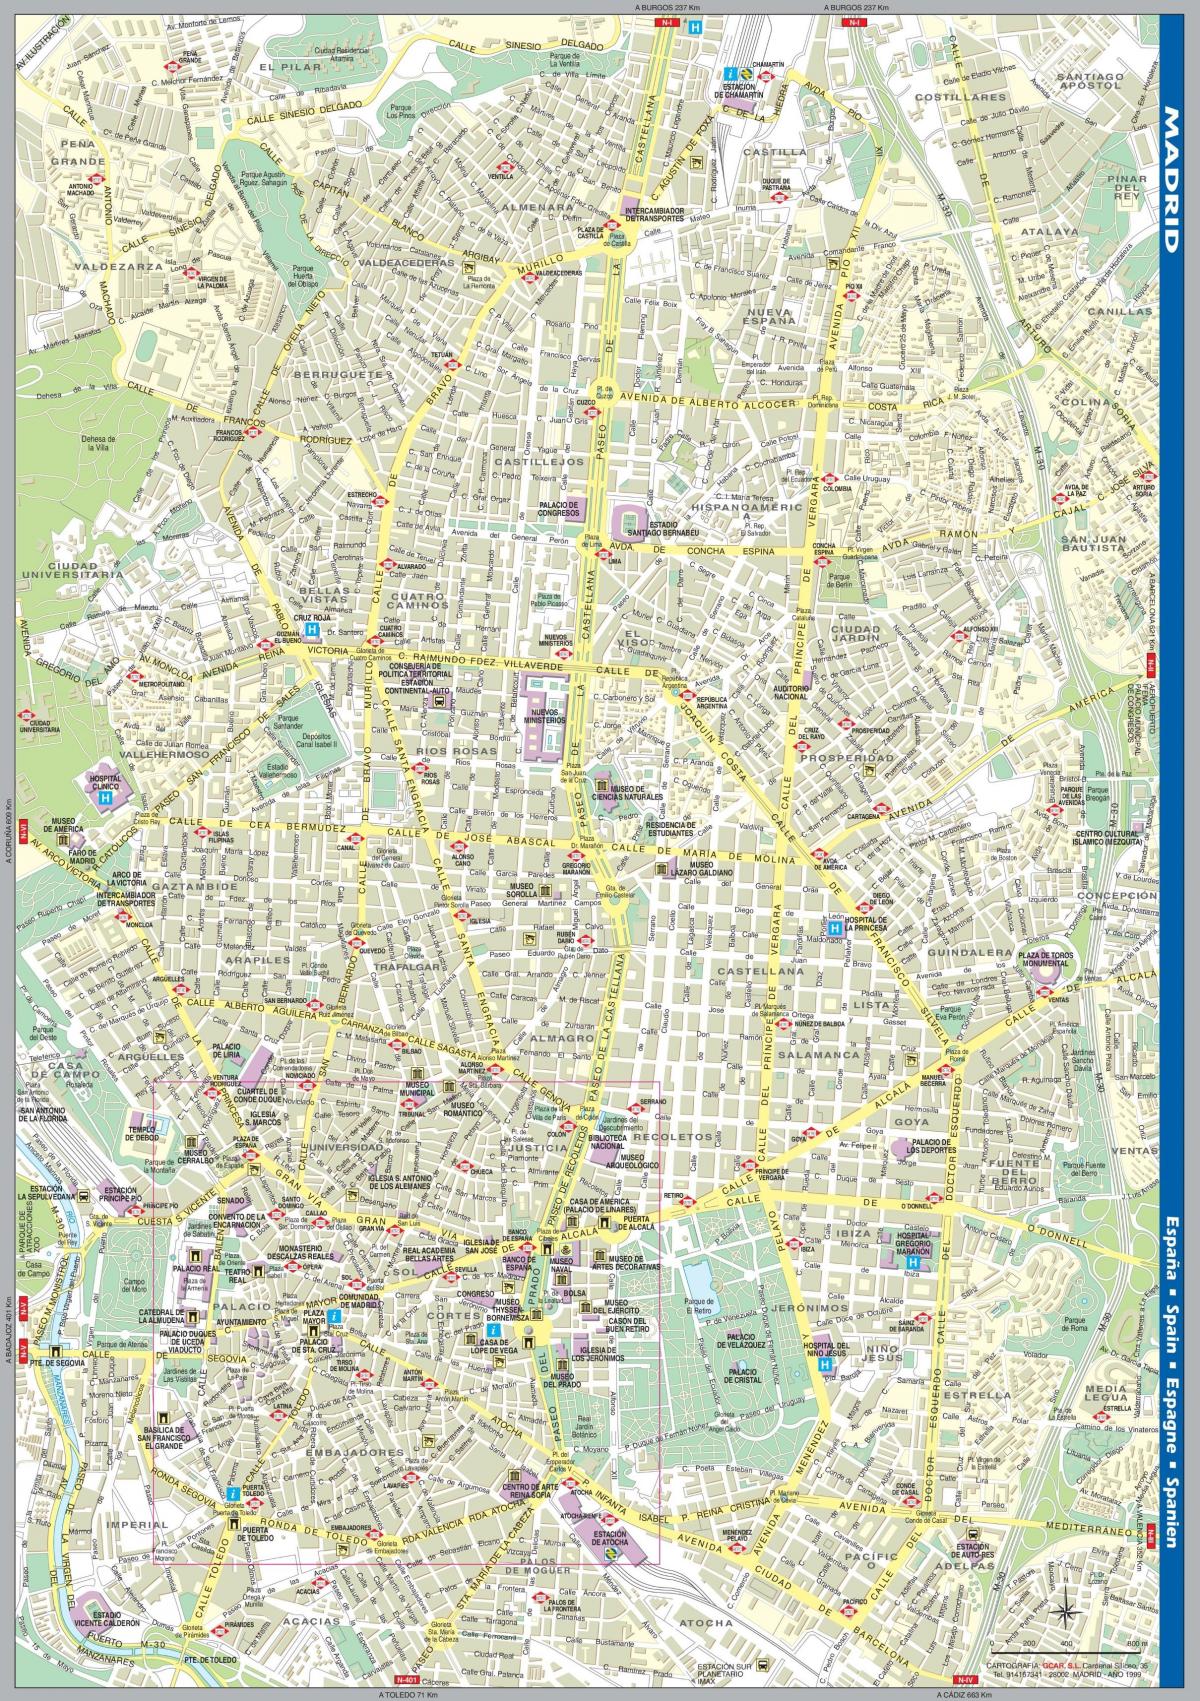 mapa ulic Madrytu do centrum miasta 